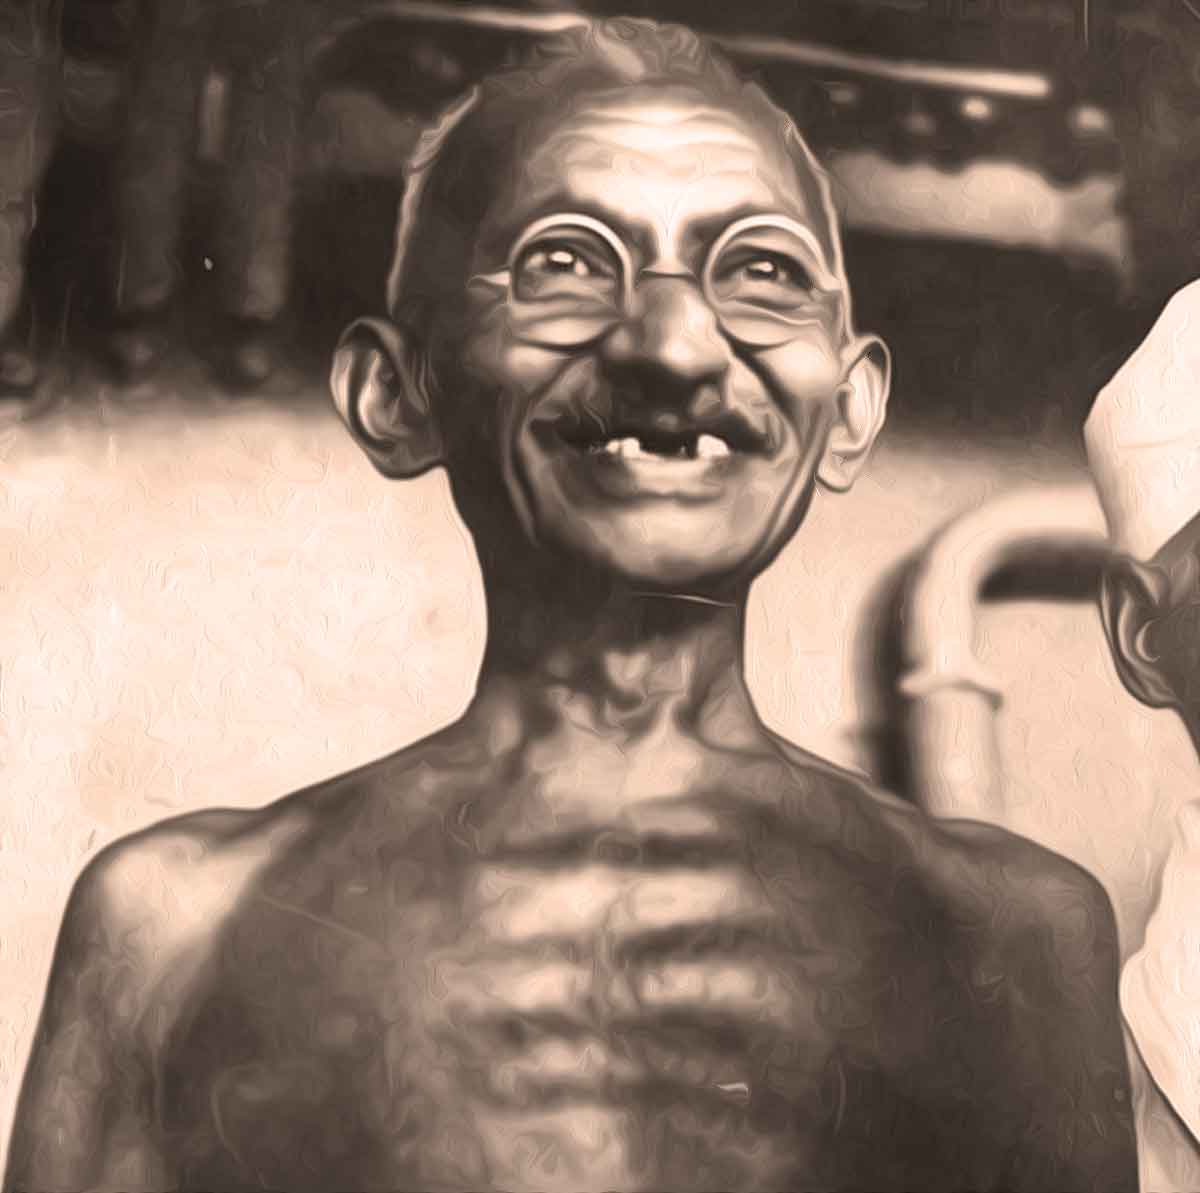 Gandhi was “Our Man” said the British: George Orwell’s Devastating Critique